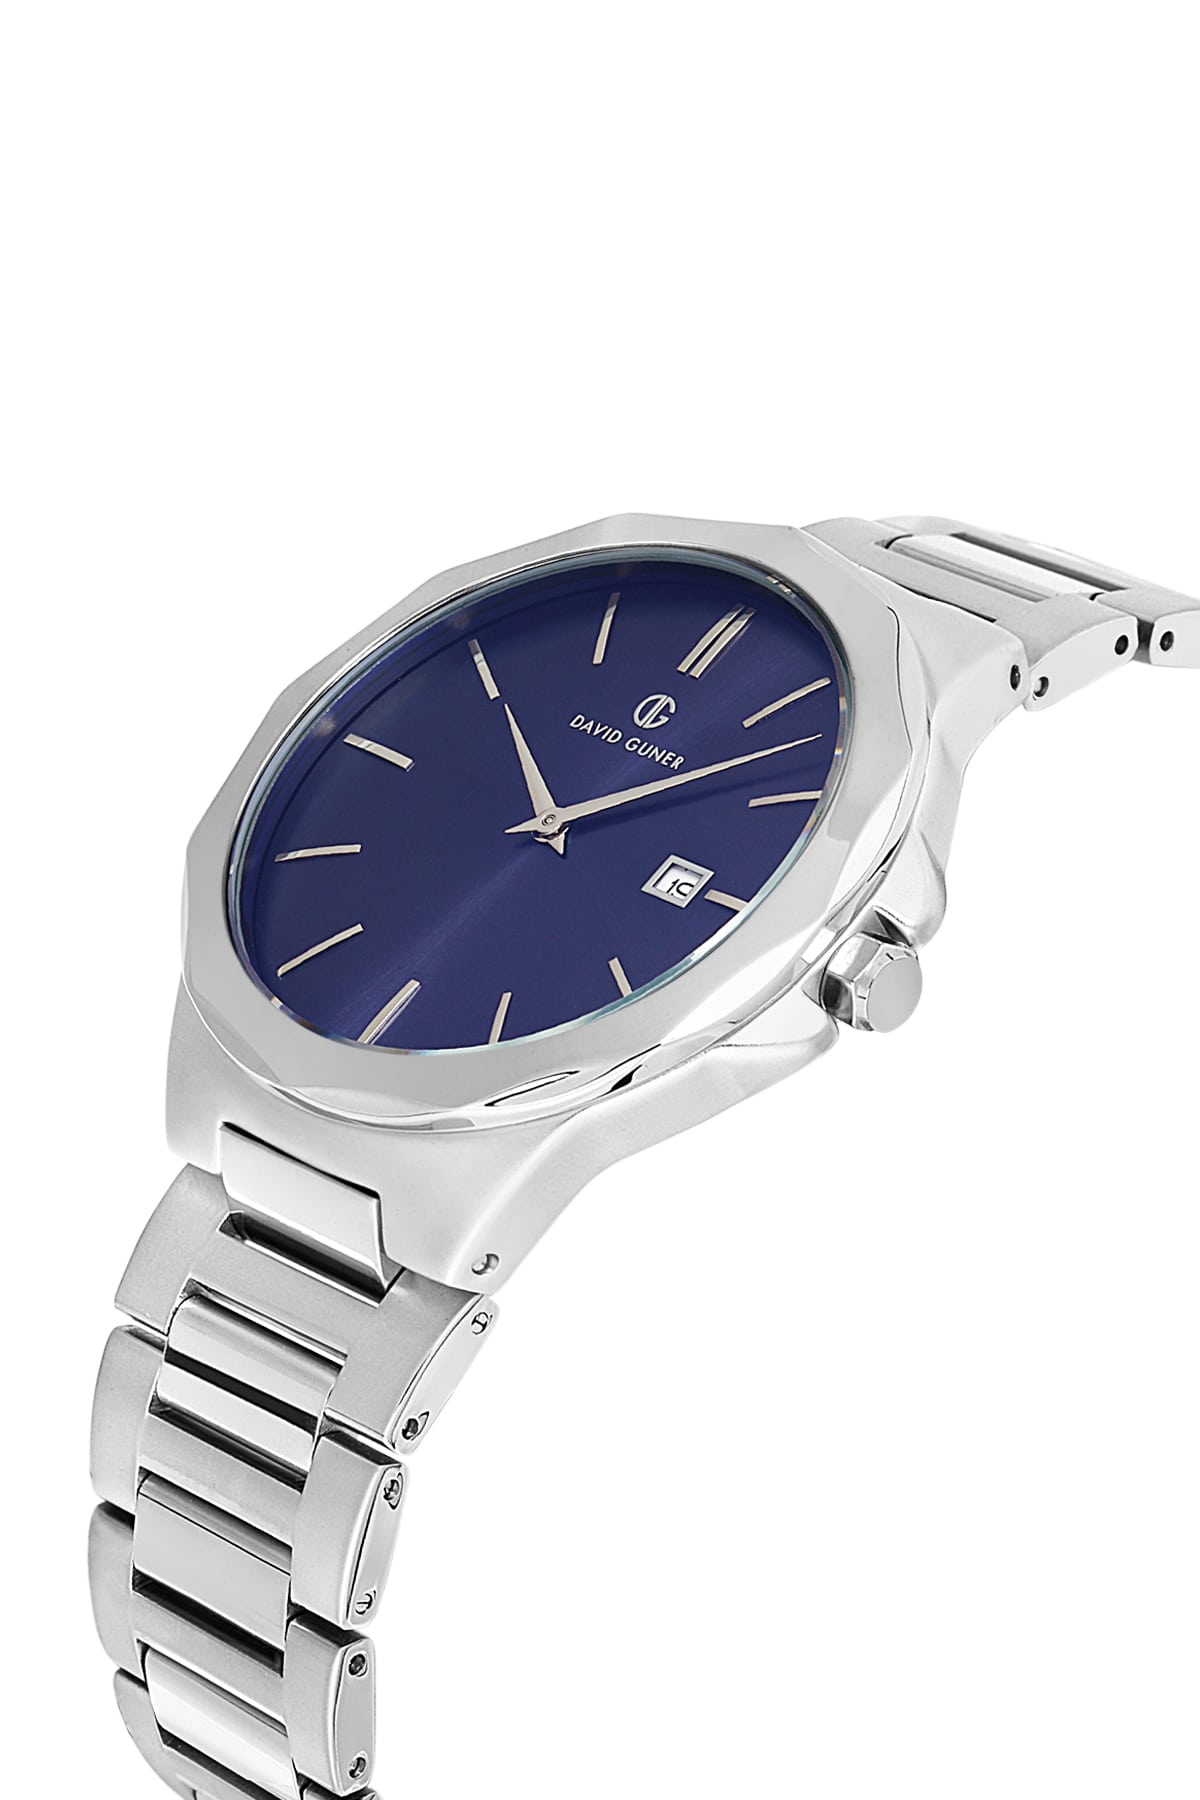 DAVID GUNER Men's Wristwatch with Dark Blue Dial and Silver Plated Calendar